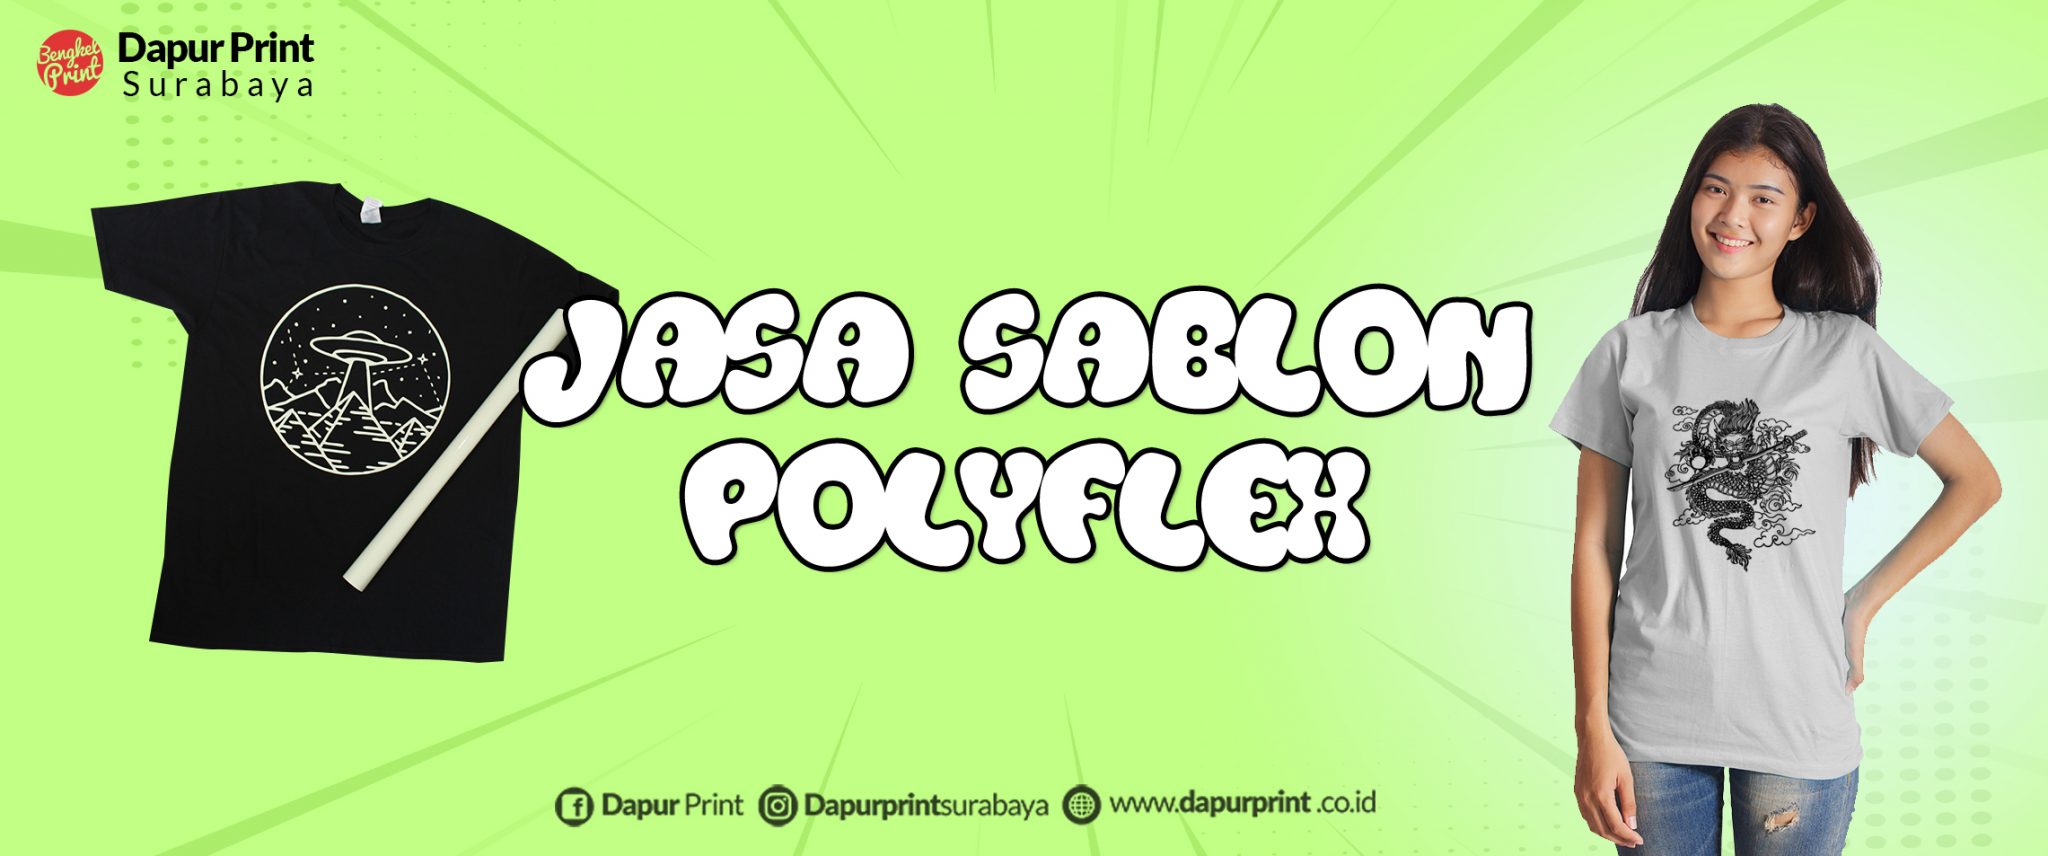  Jasa  Sablon Kaos Cutting  Polyflex  Dapur Print